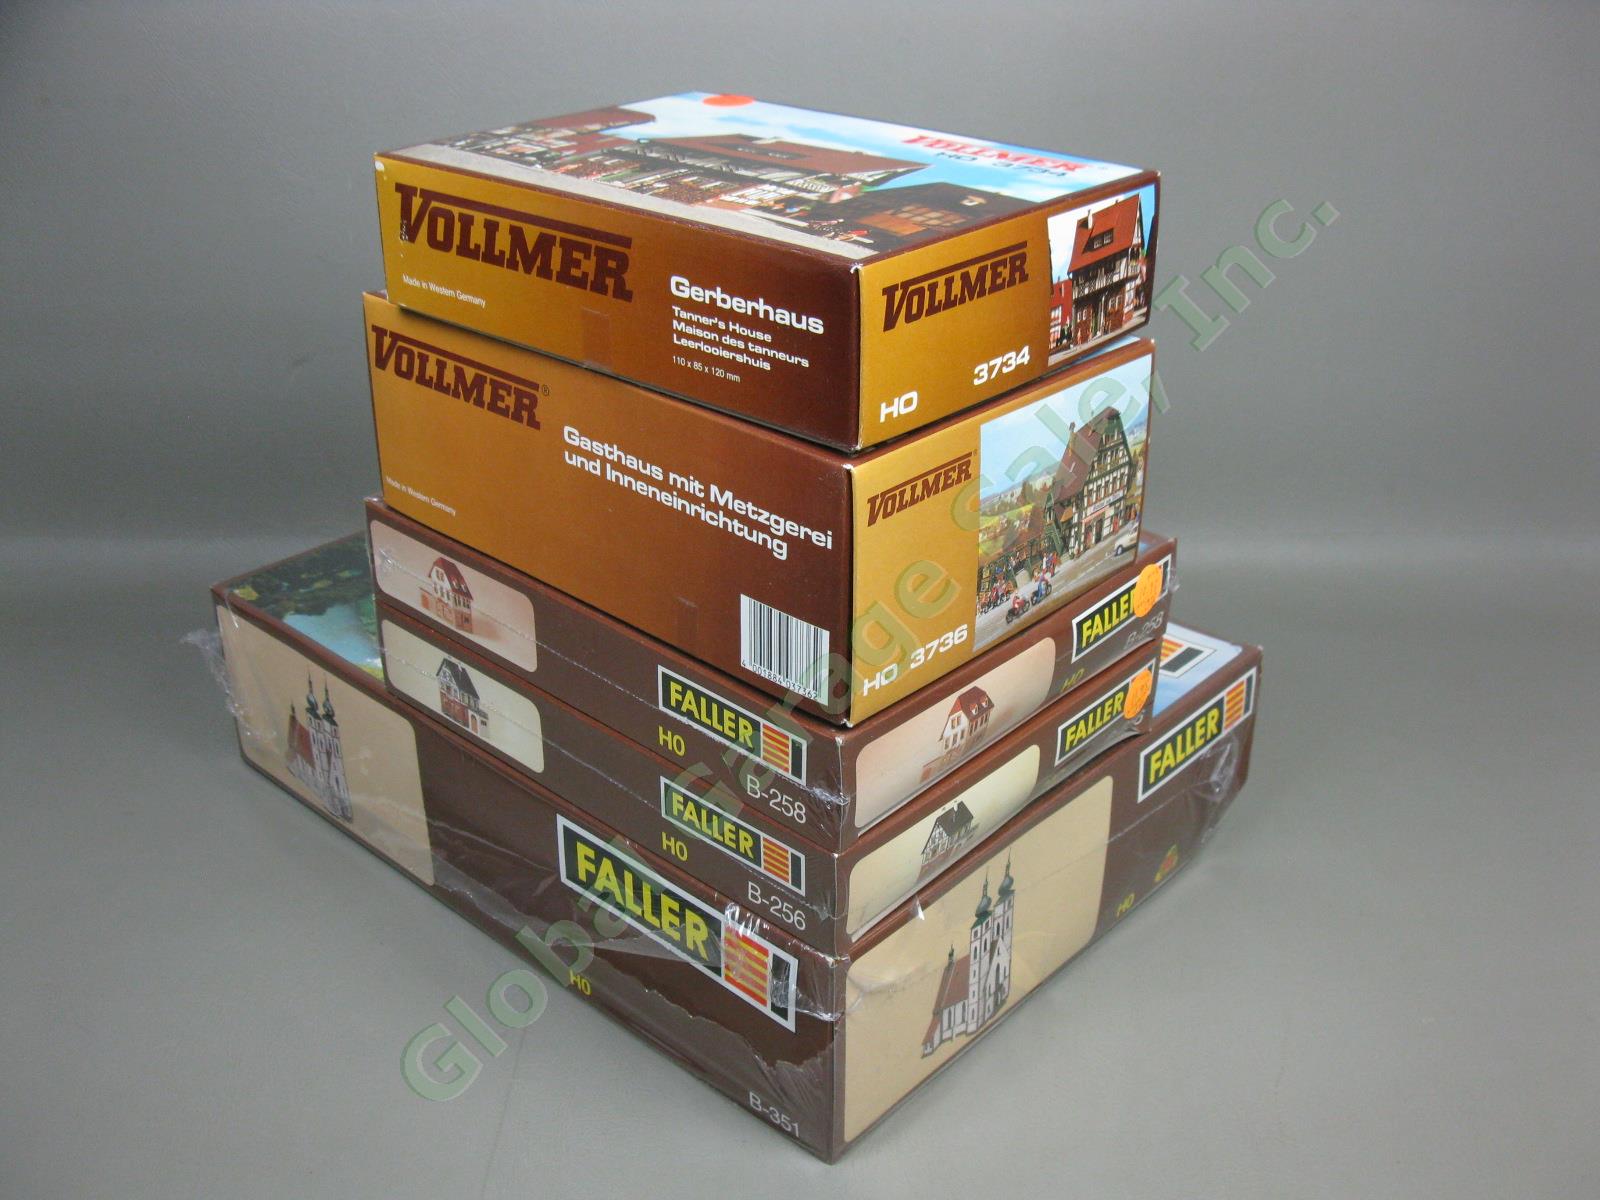 5 NEW Faller Vollmer HO Model Train Building Kit Set Lot 3734 3736 B-256 258 351 8